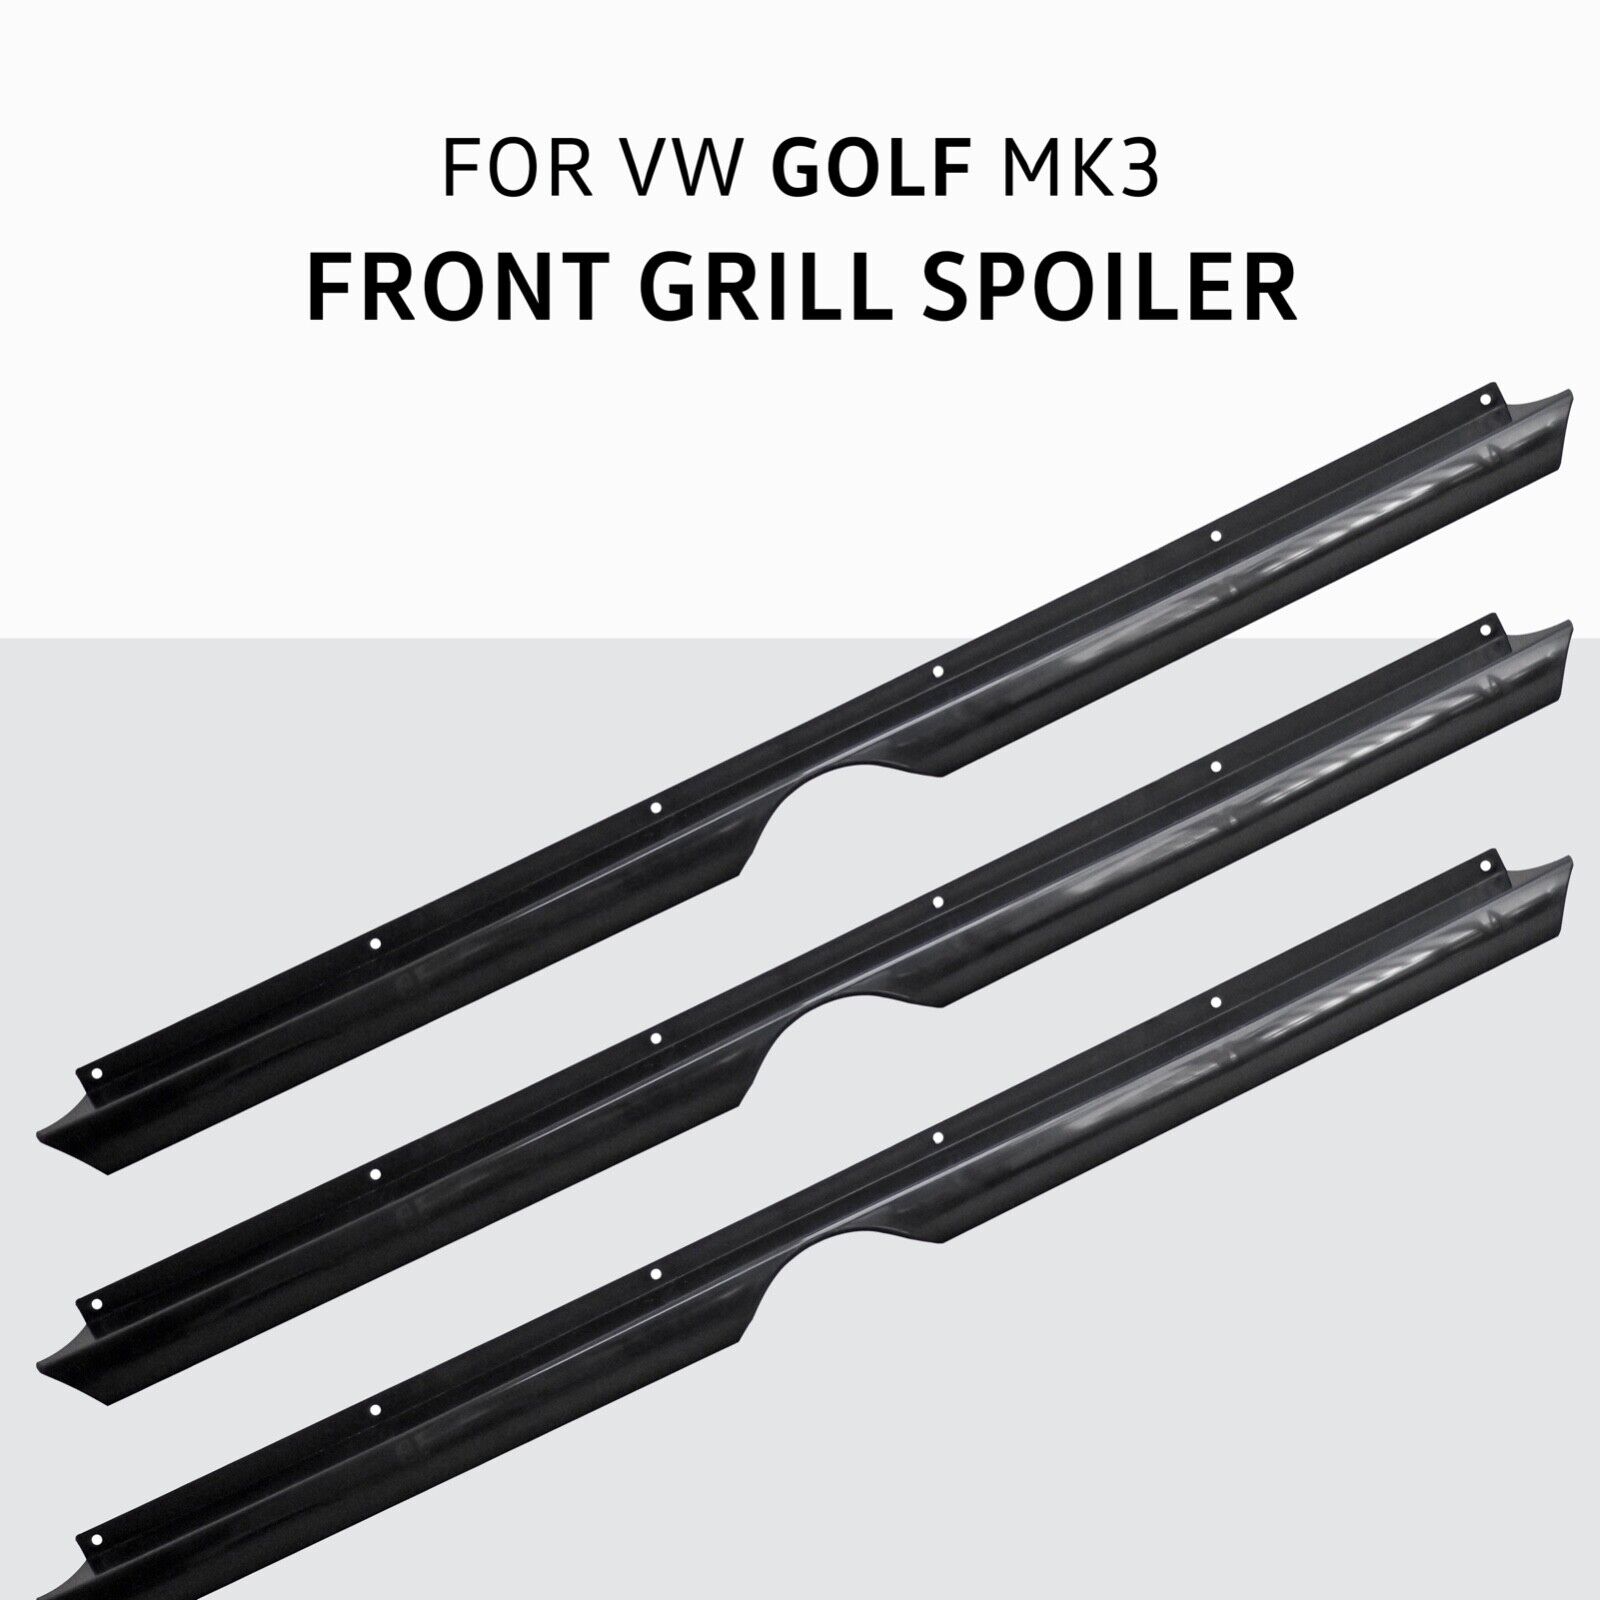 Front Grill Spoiler Slat Grille VW MK3 Golf Cabrio Variant GTI VR6 Grid